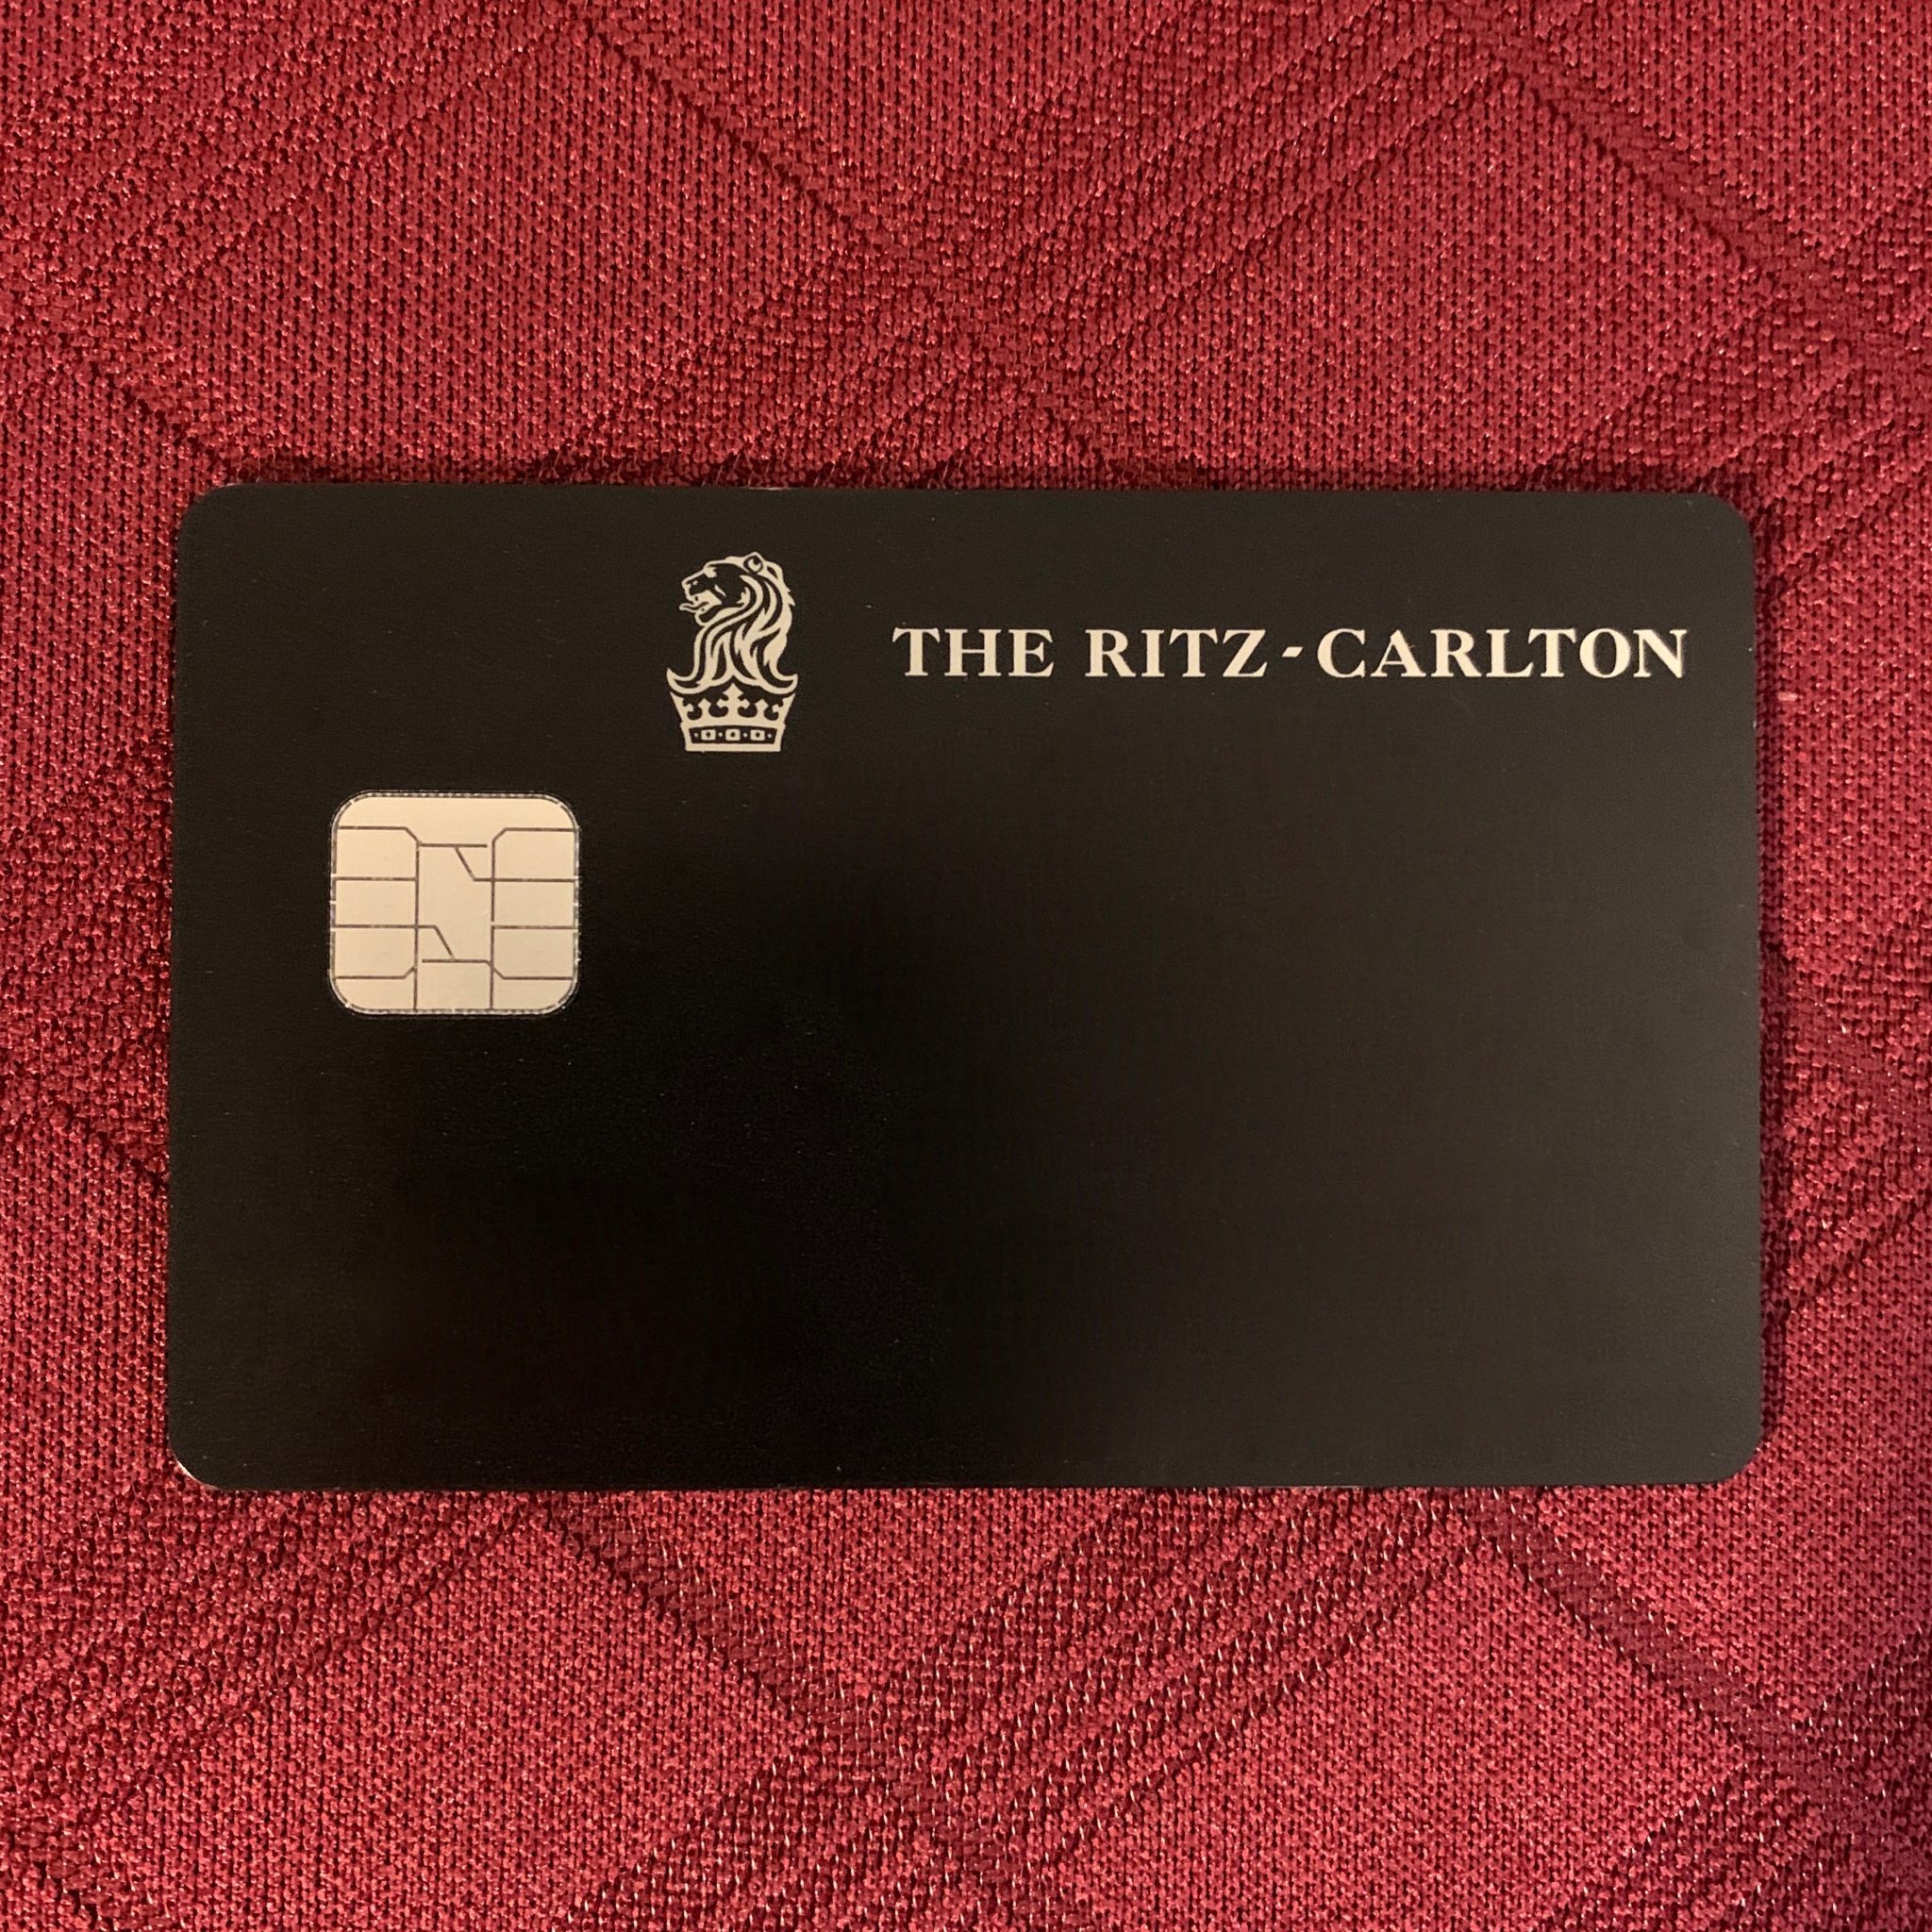 chase ritz carlton card travel credit